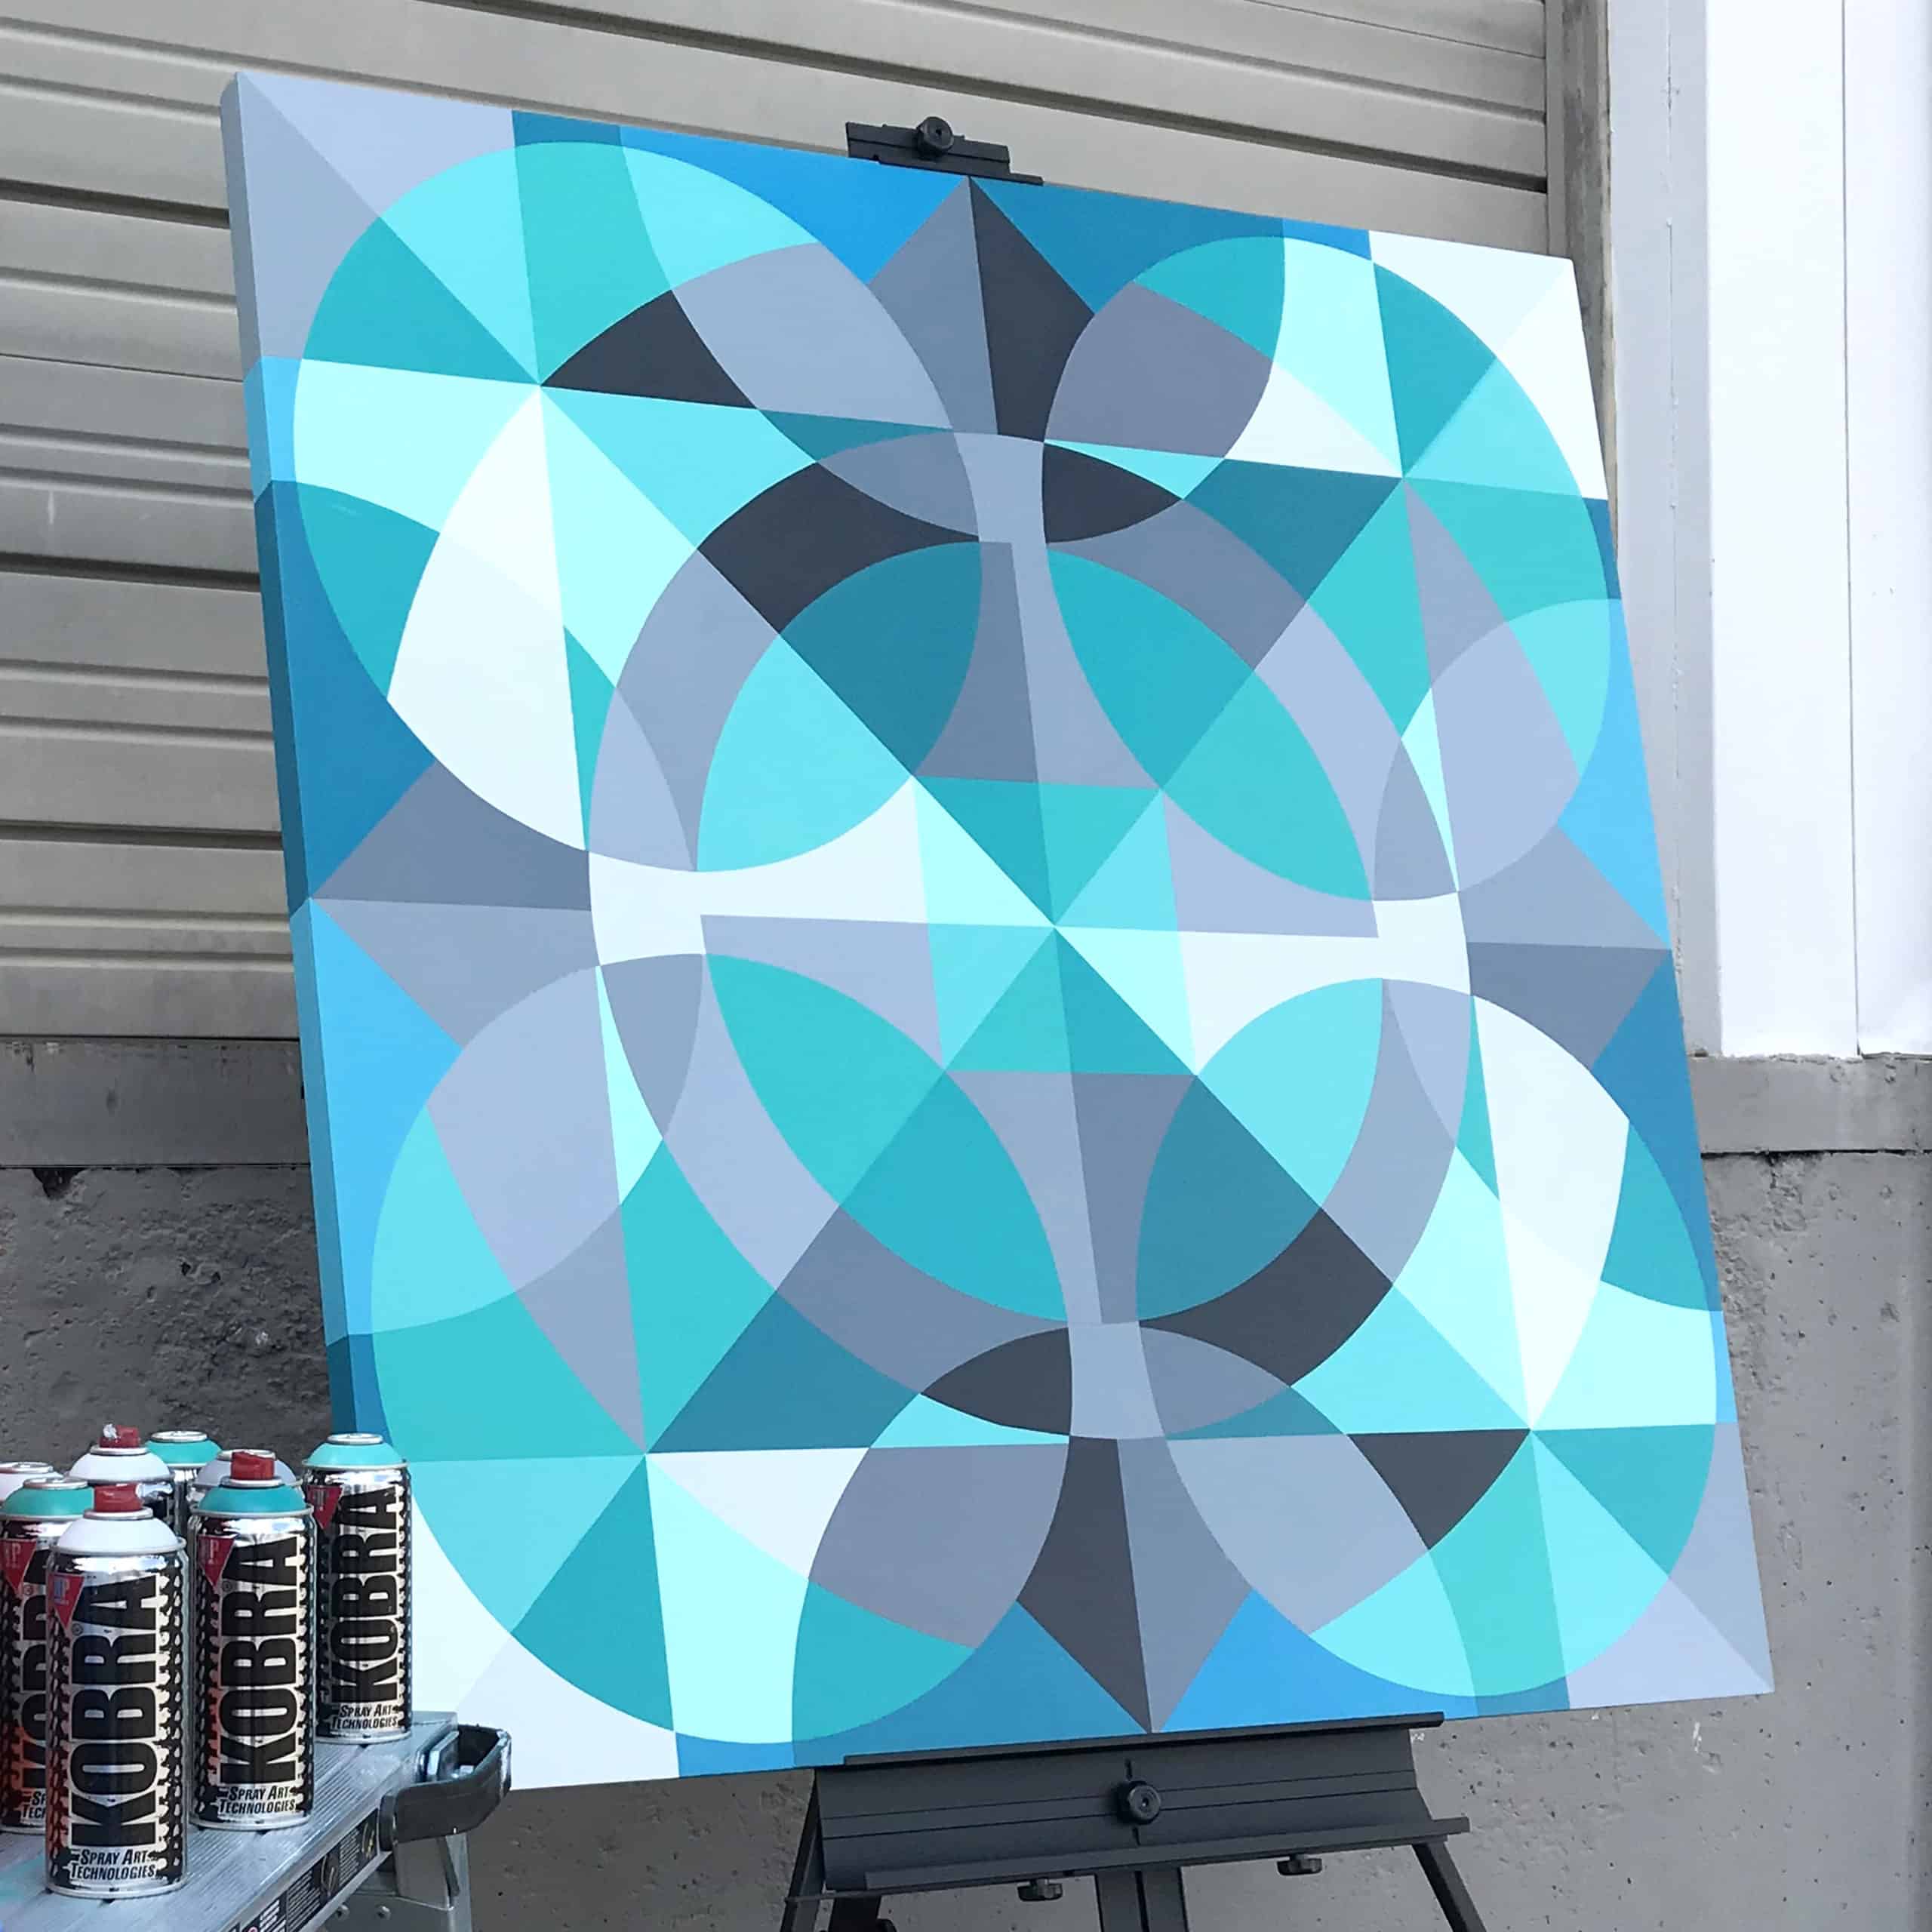 Artist Jason T. Graves creates new geometric art painting for solo art show.